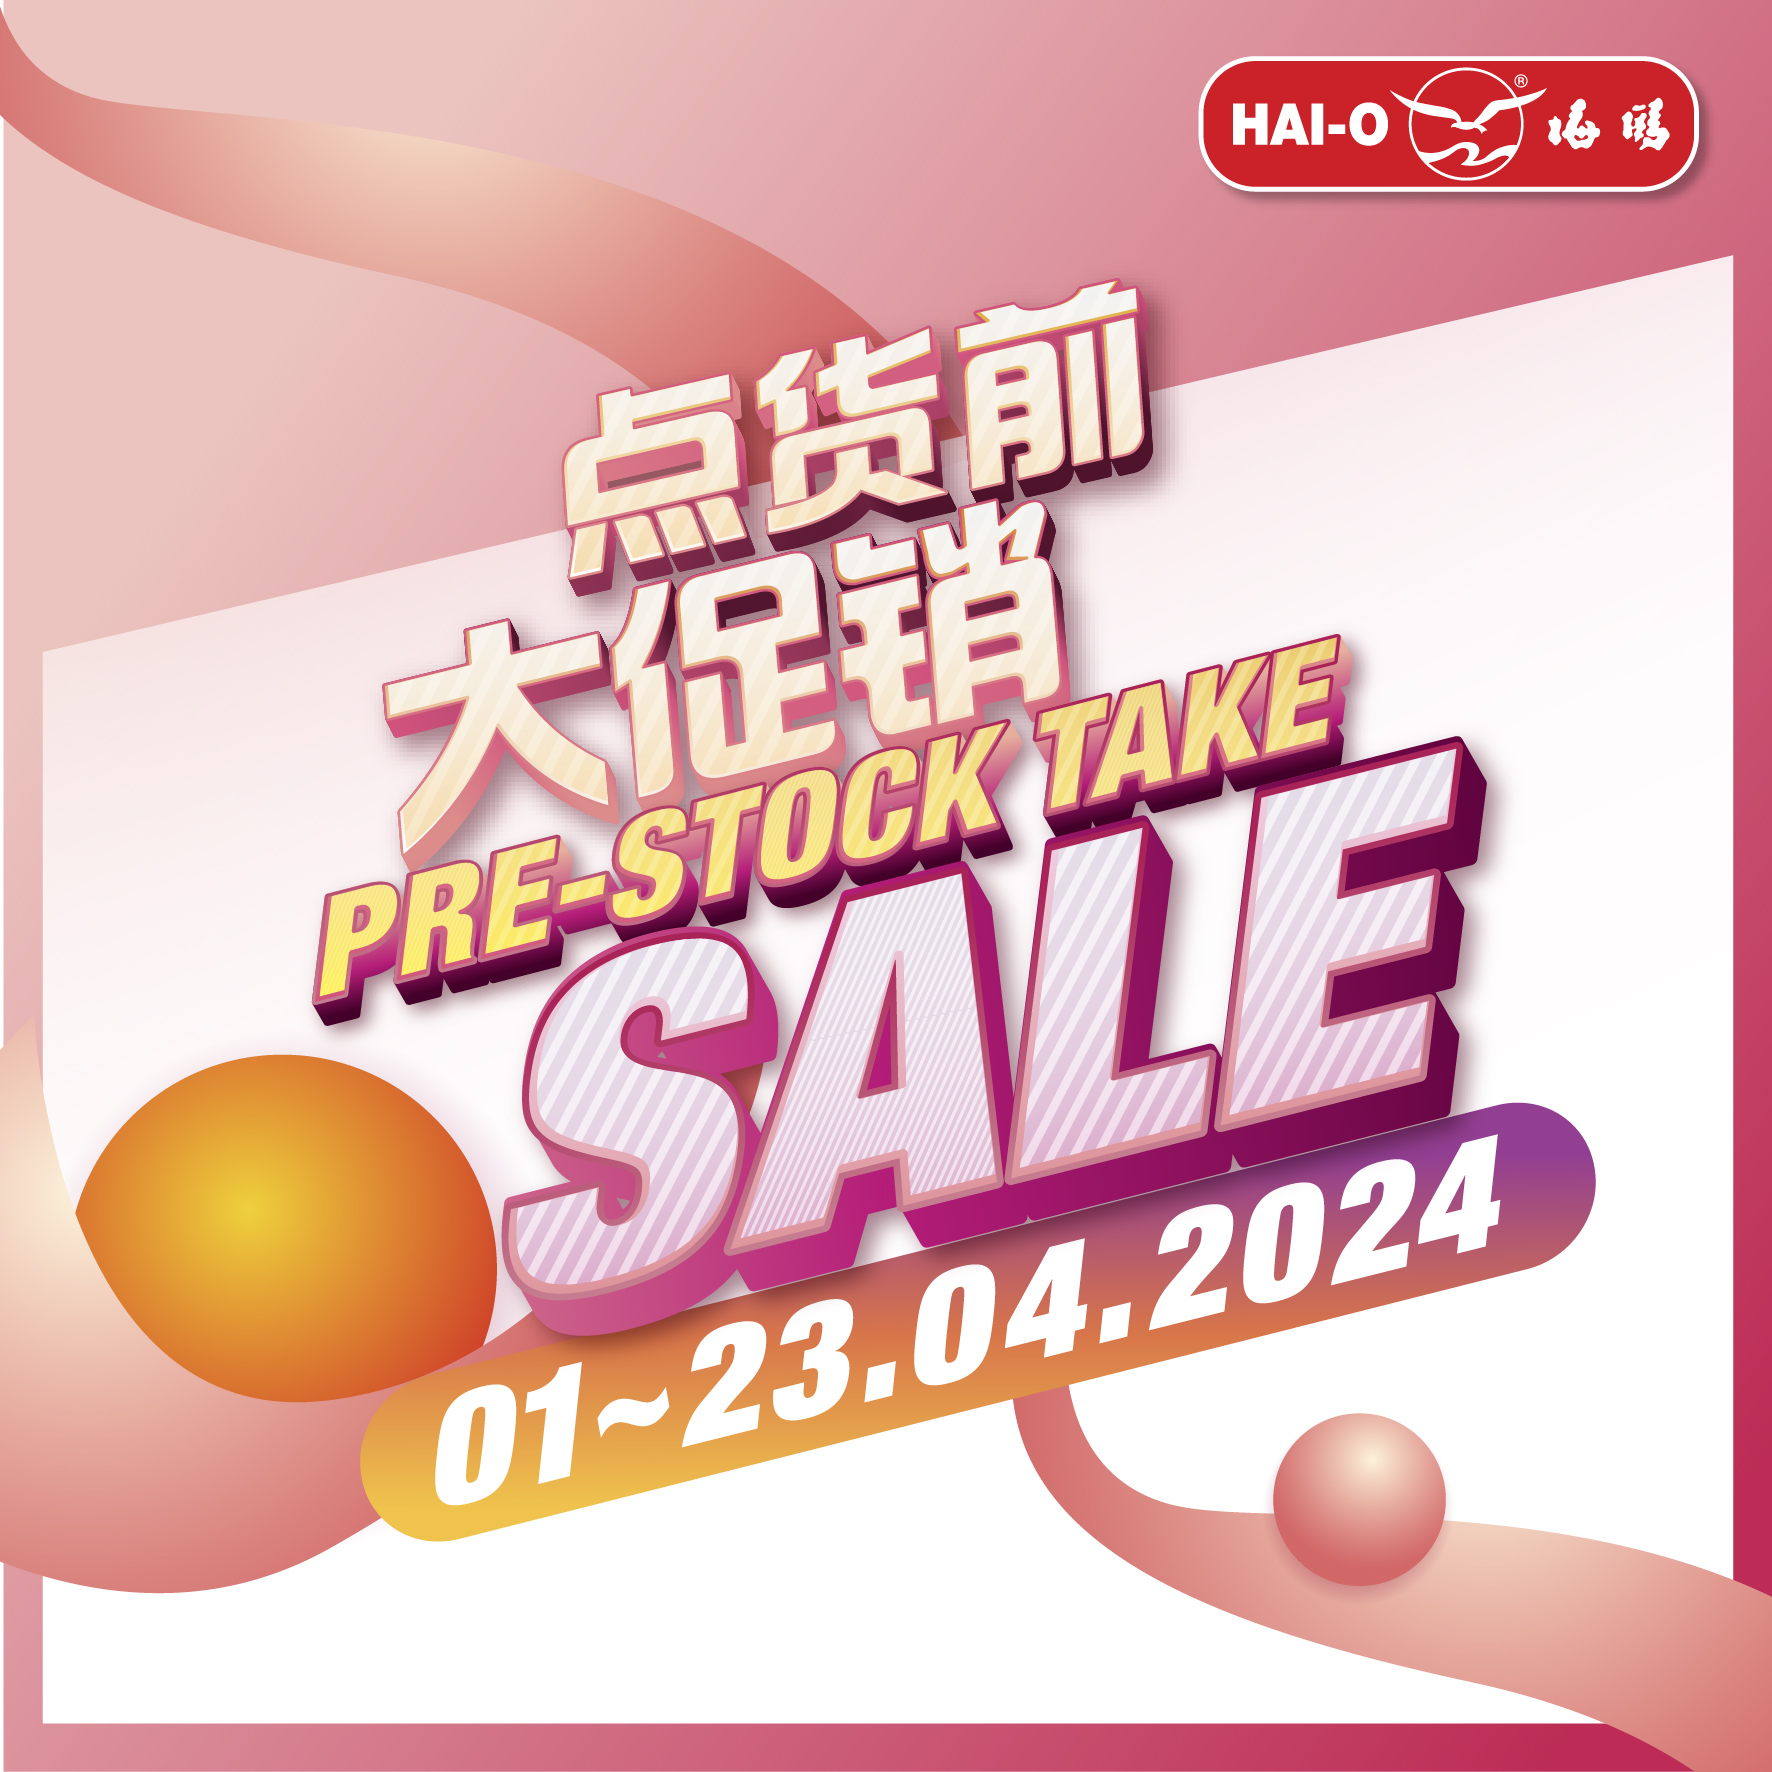 Pre-Stock Take Sale 2024